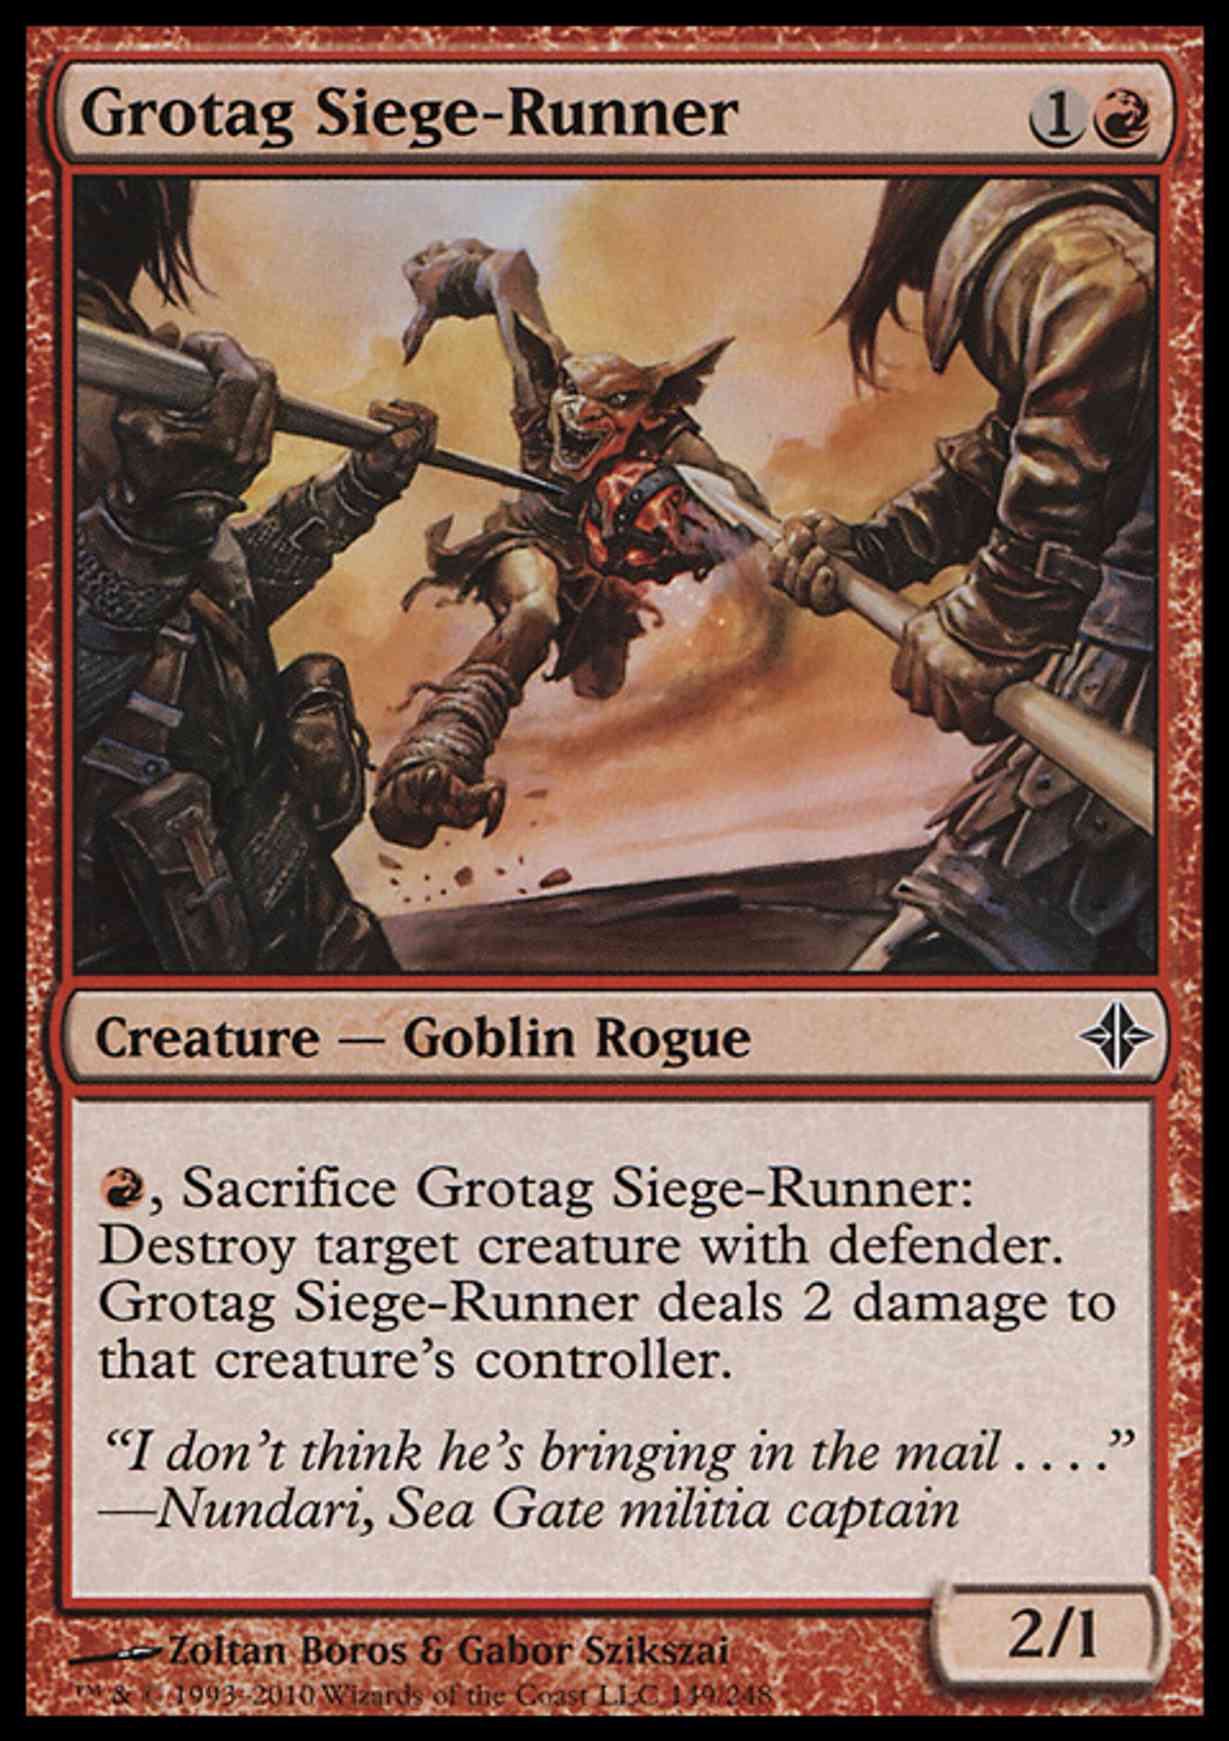 Grotag Siege-Runner magic card front